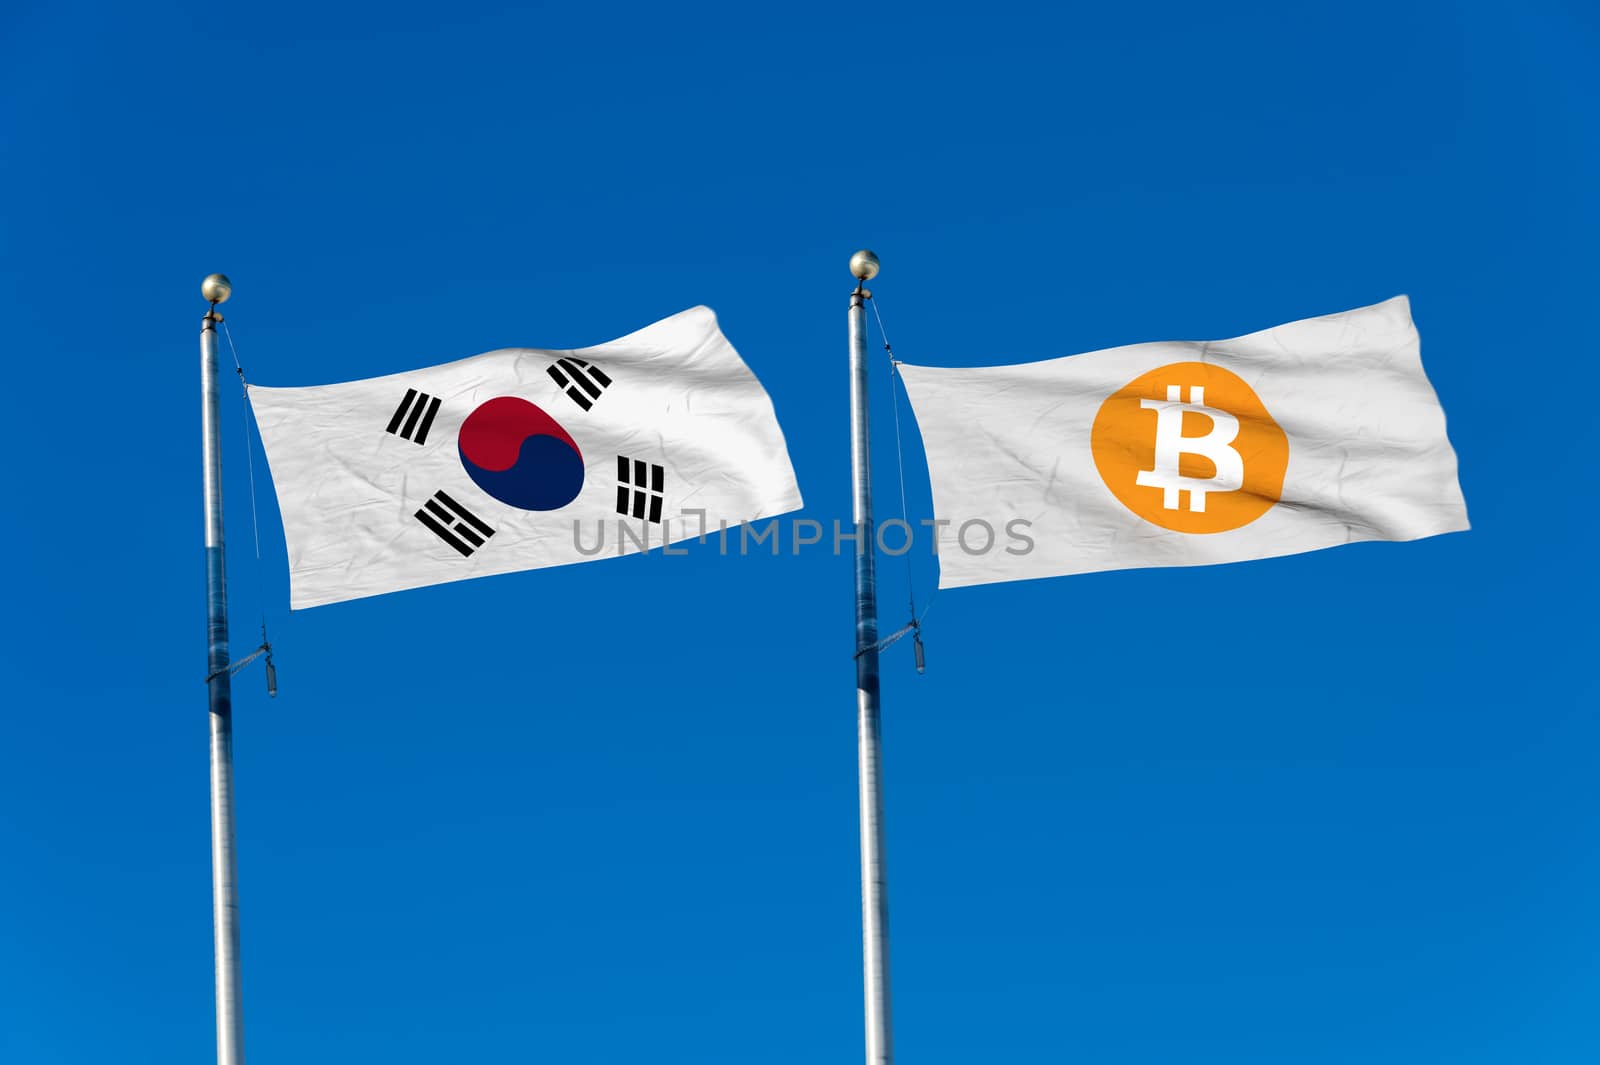 South Korea flag and Bitcoin Flag waving over blue sky (digitally generated image)